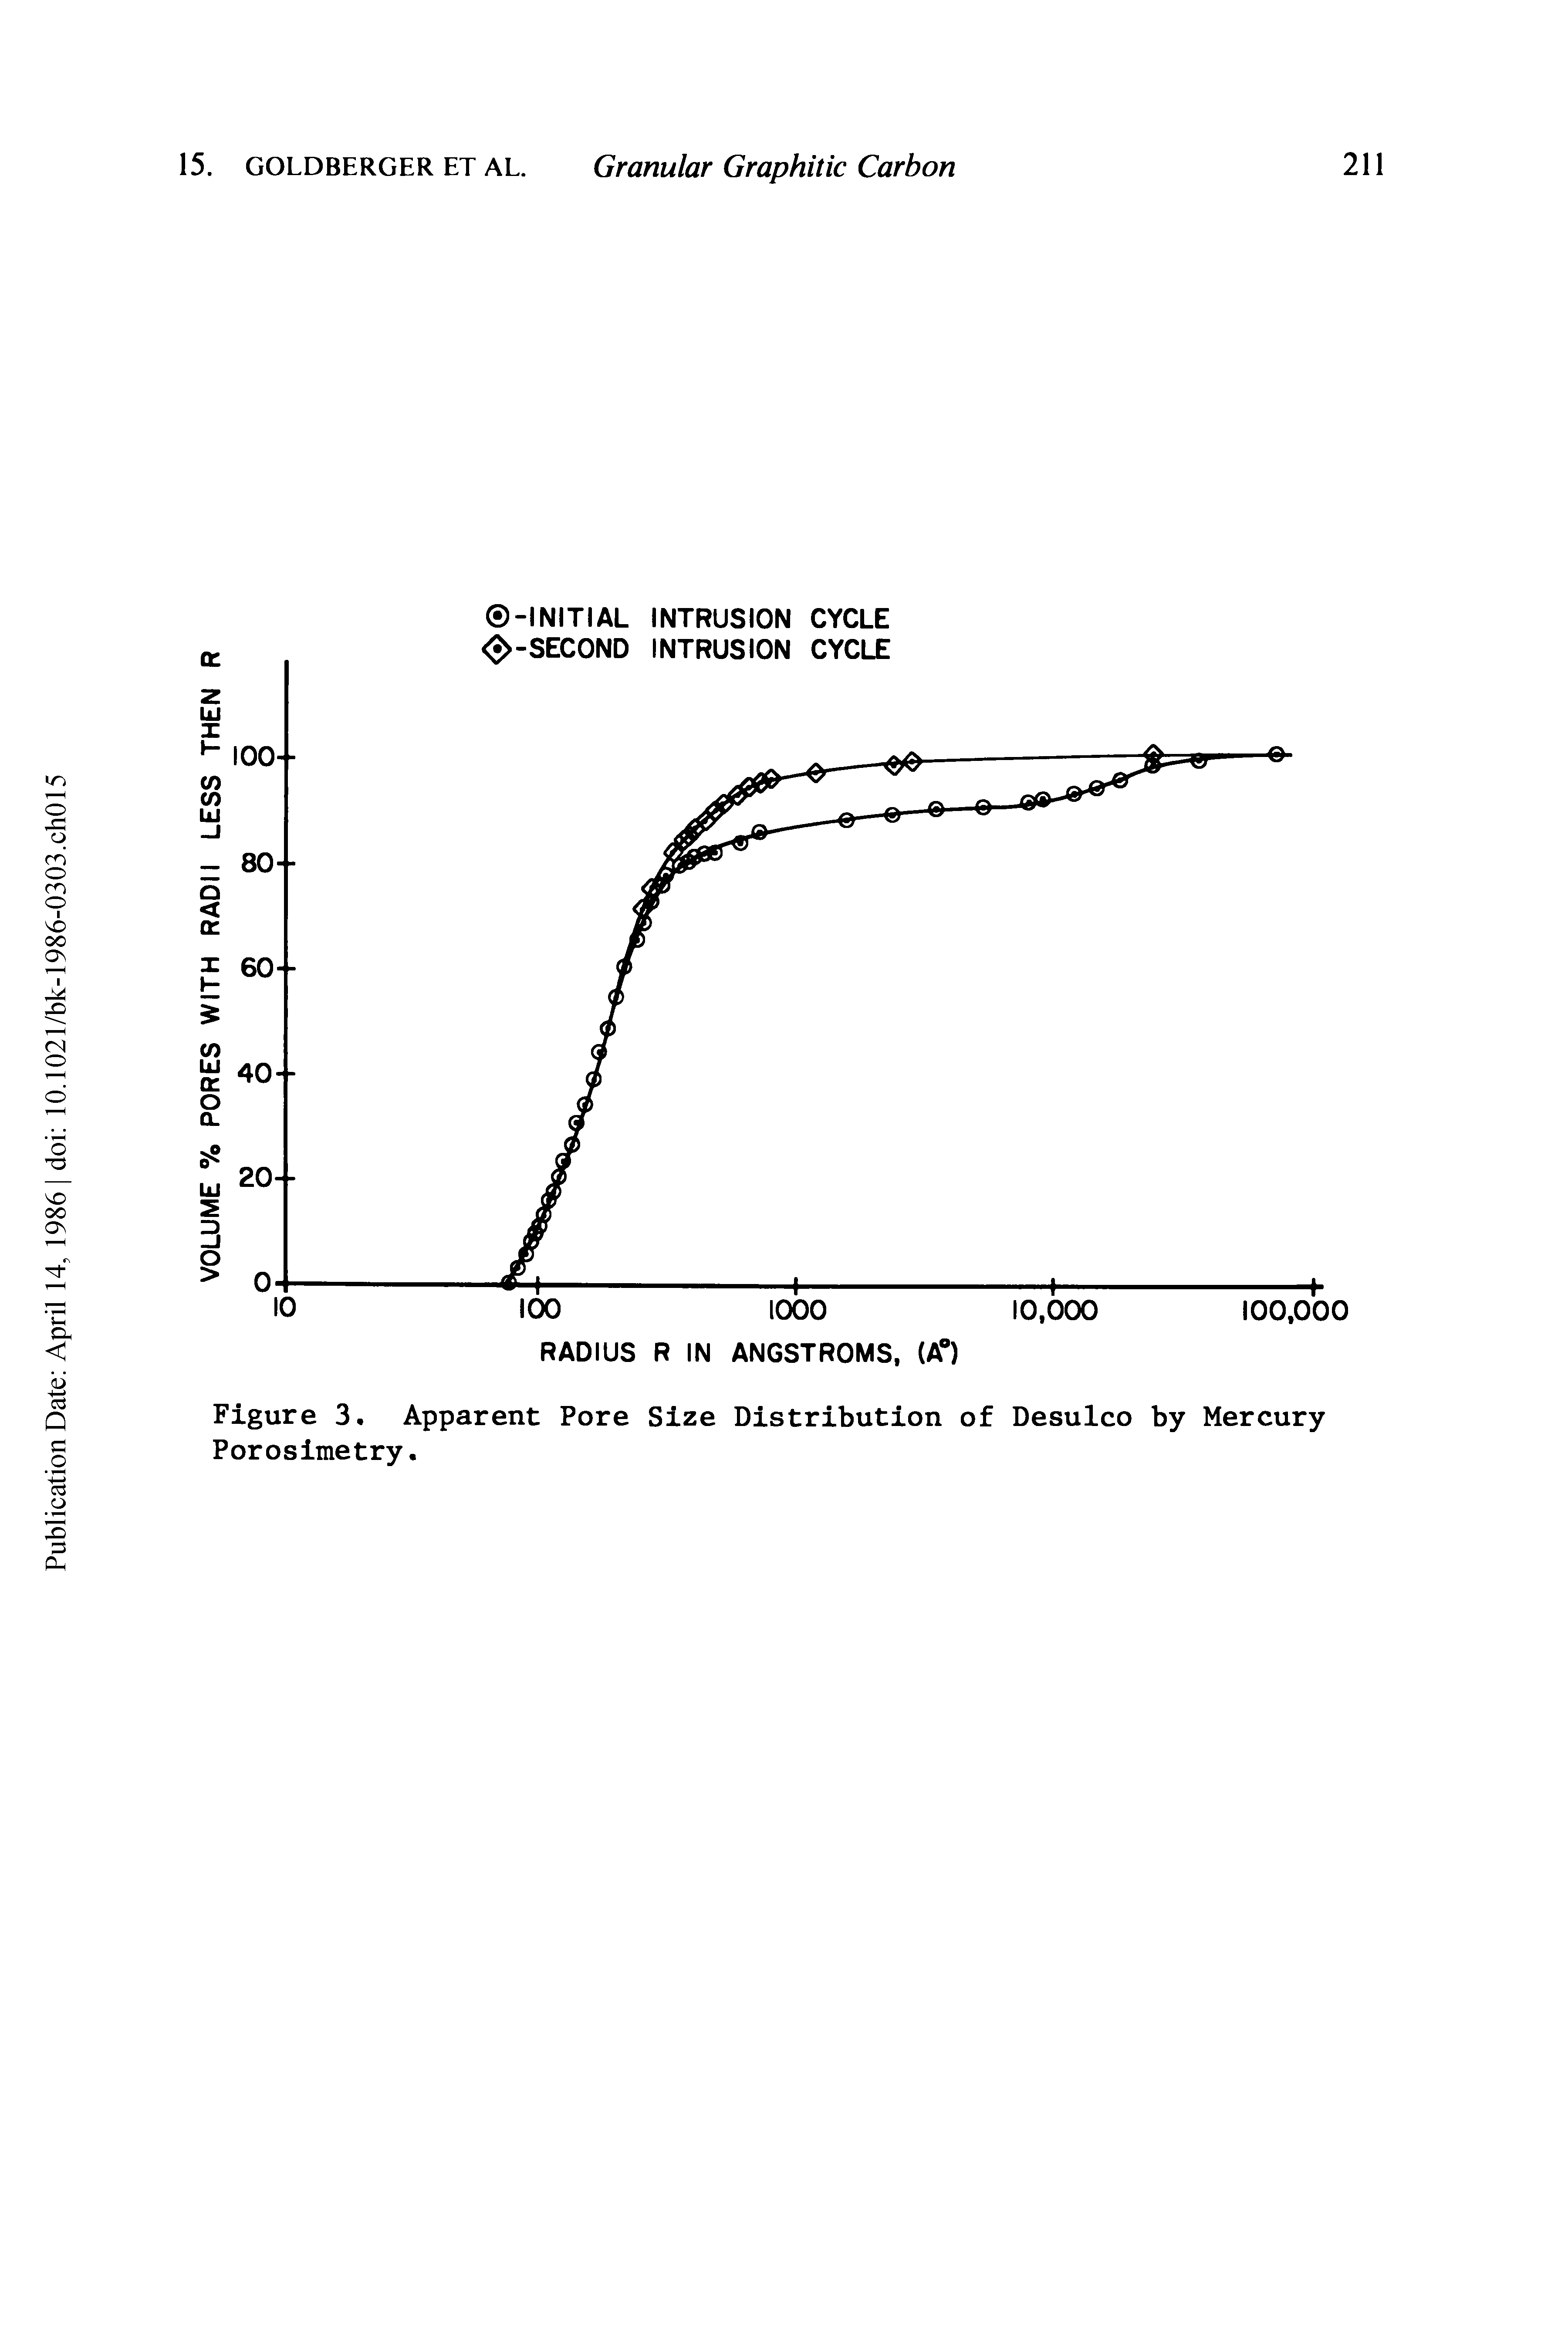 Figure 3. Apparent Pore Size Distribution of Desulco by Mercury Porosimetry.